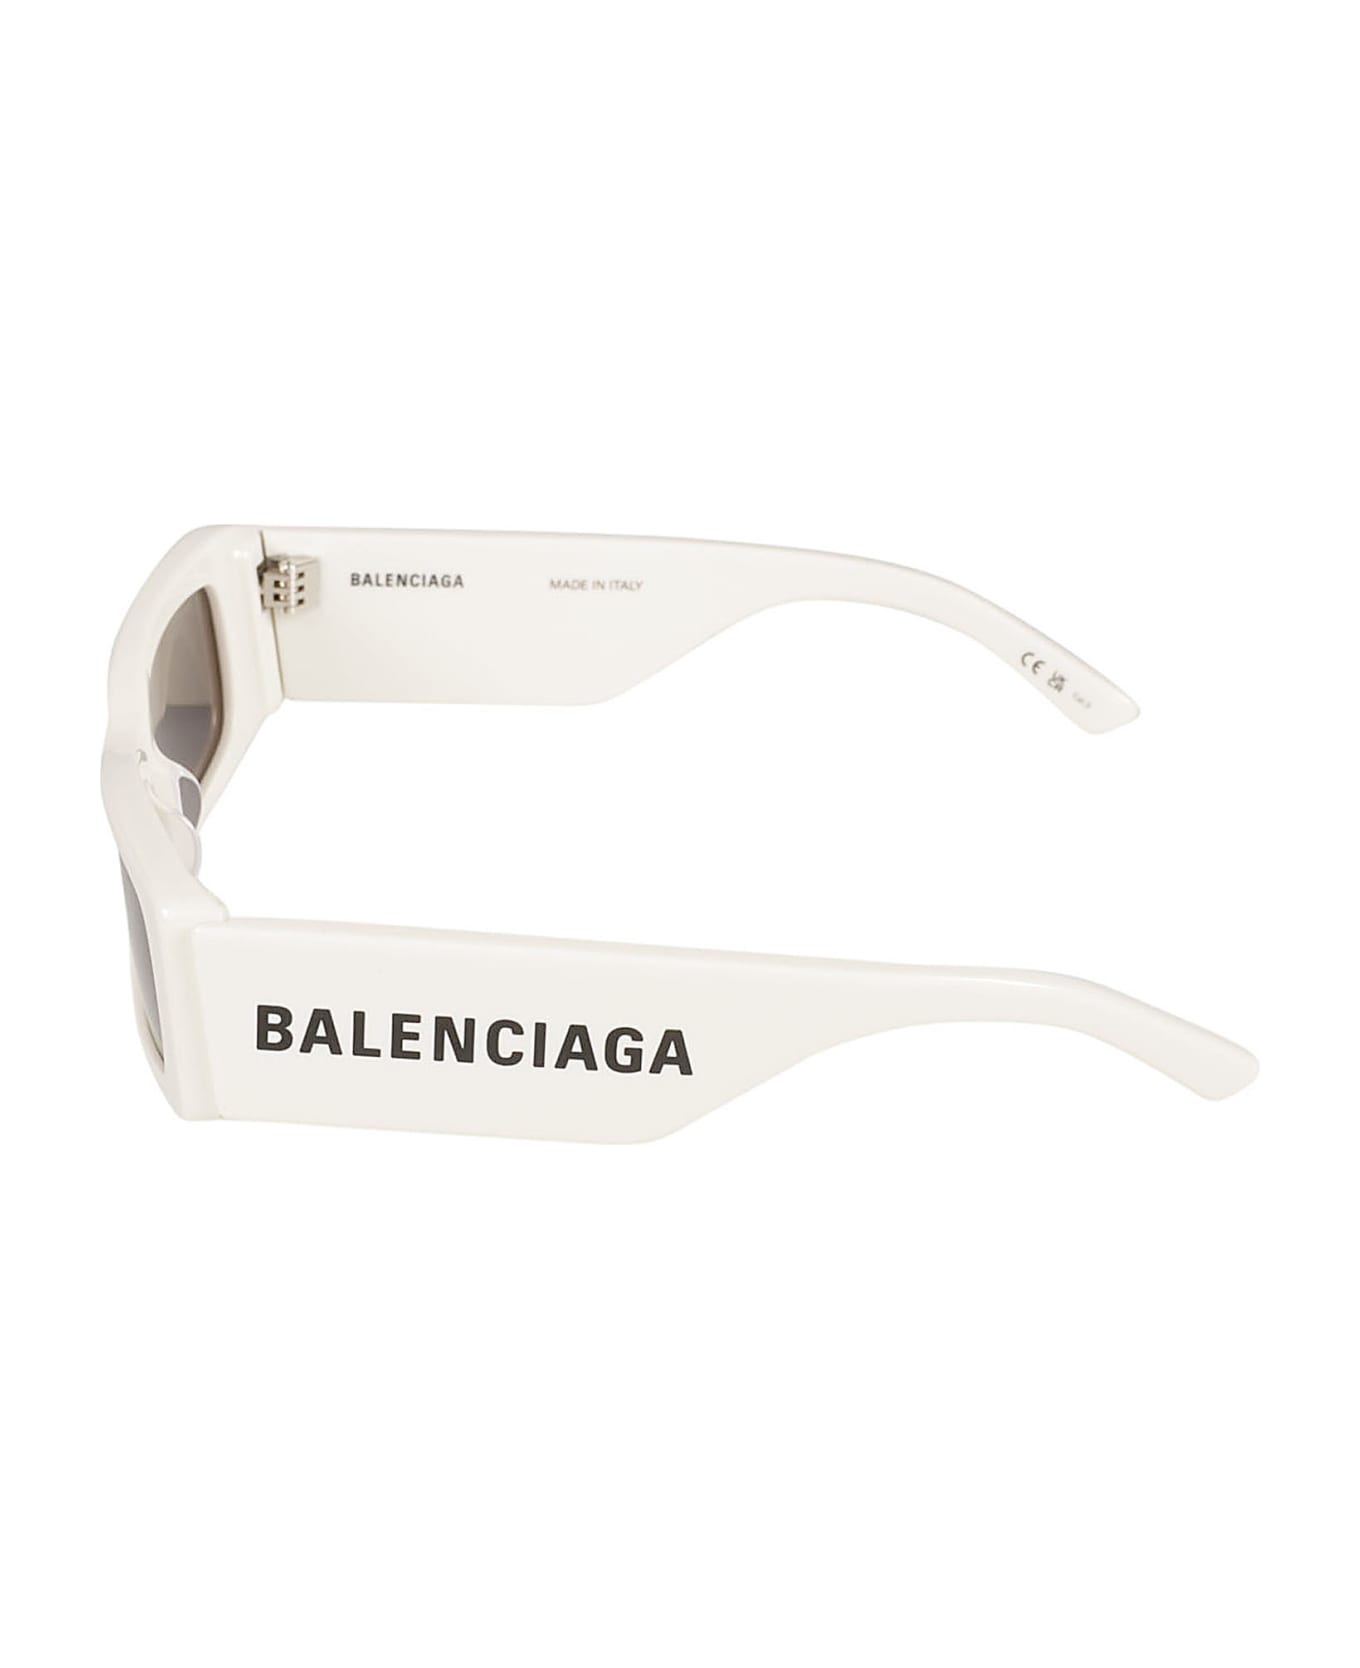 Balenciaga Eyewear Logo Sided Rectangular Frame Sunglasses - White/Grey サングラス